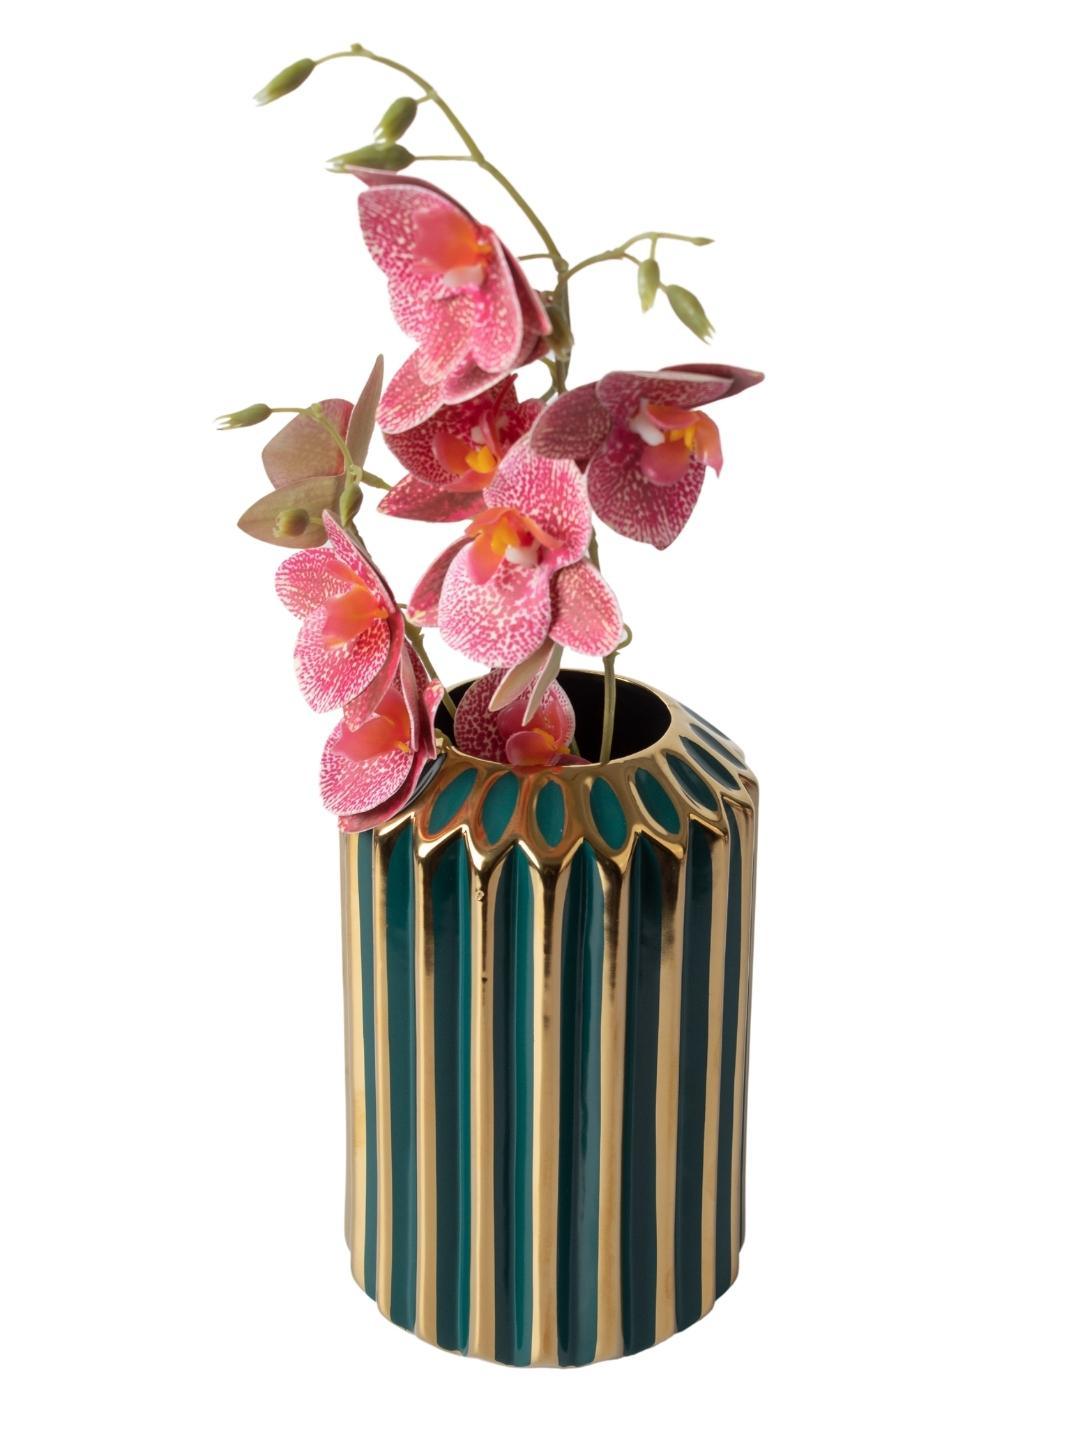 Decorative Ceramic Flower Vase - Golden & Green Cyclinderical, Glossy